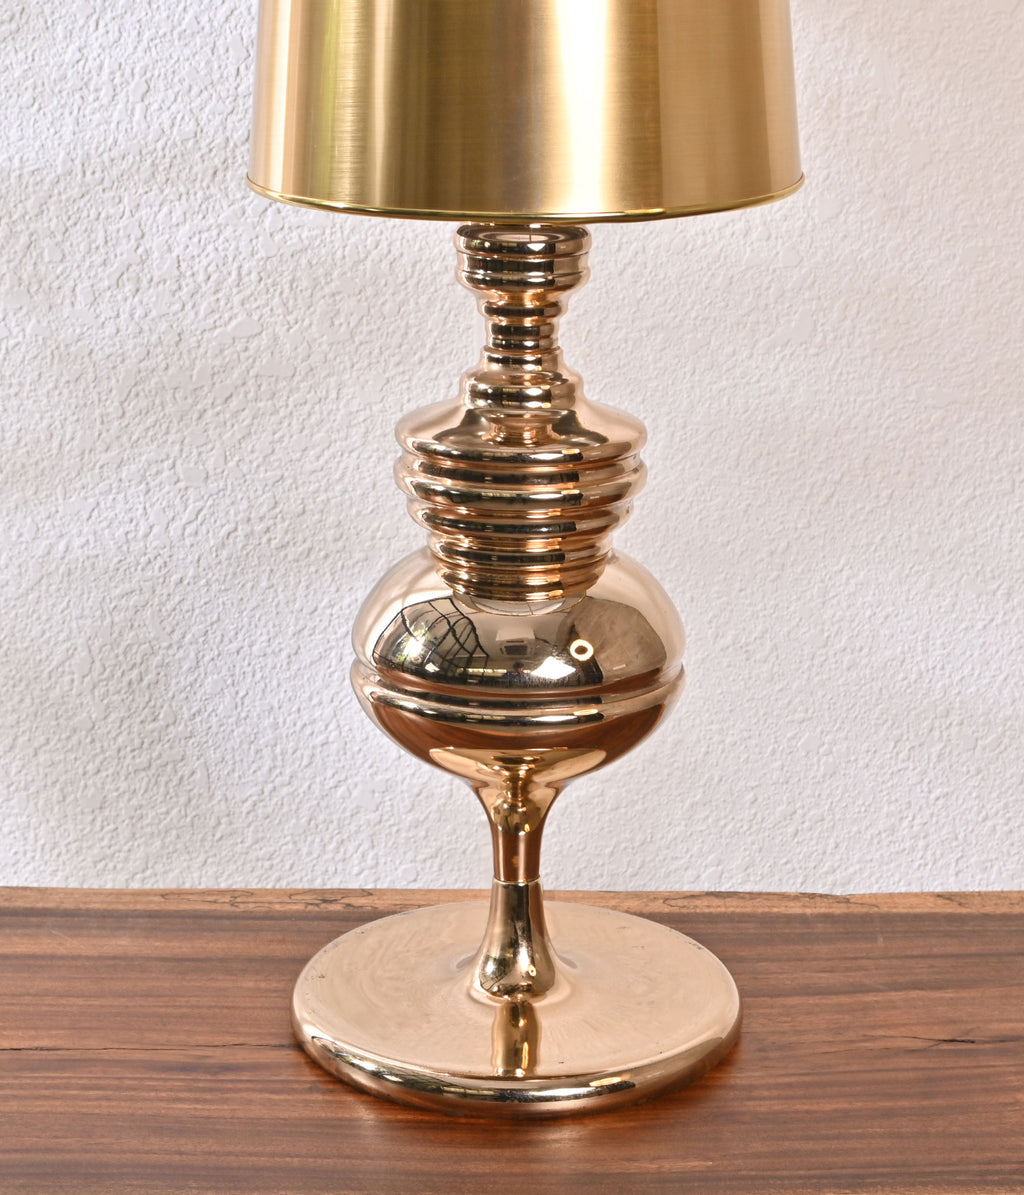 Golden Aura metal Luminaire lamp